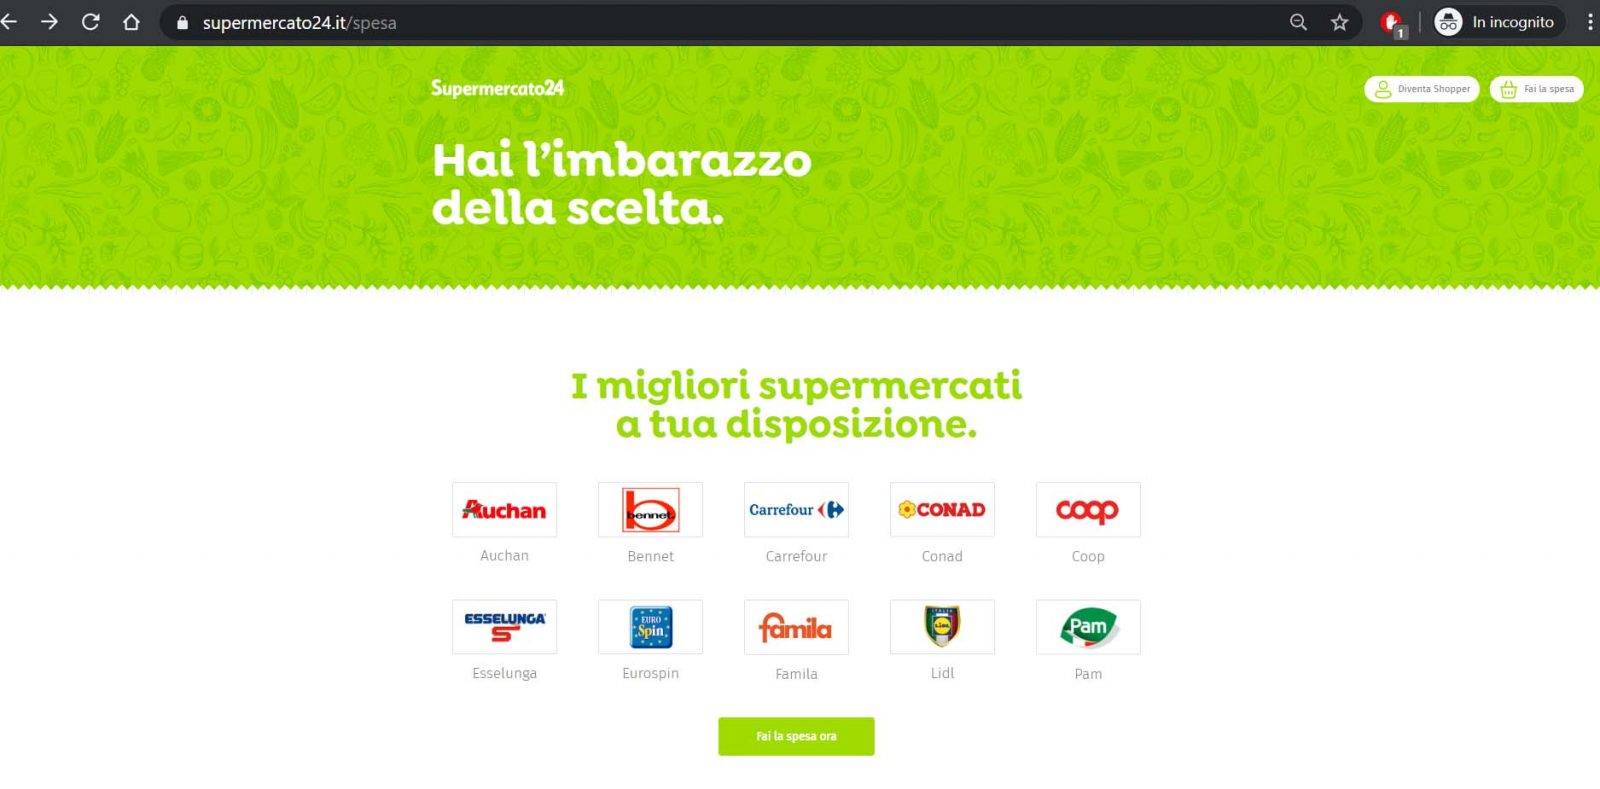 Supermercati24.it